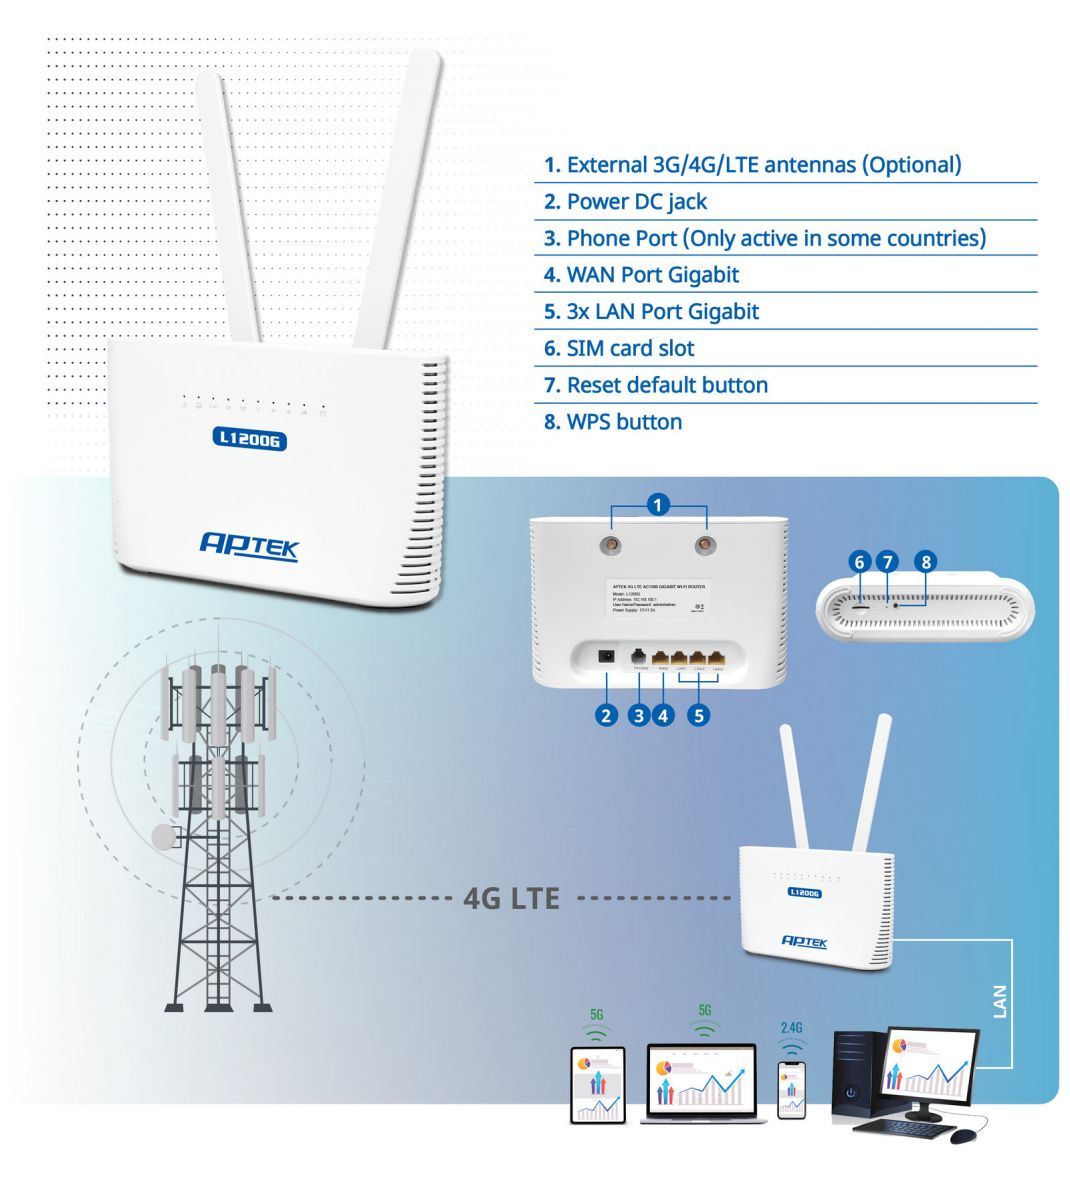 BỘ PHÁT 3G/4G WIFI APTEK L1200G